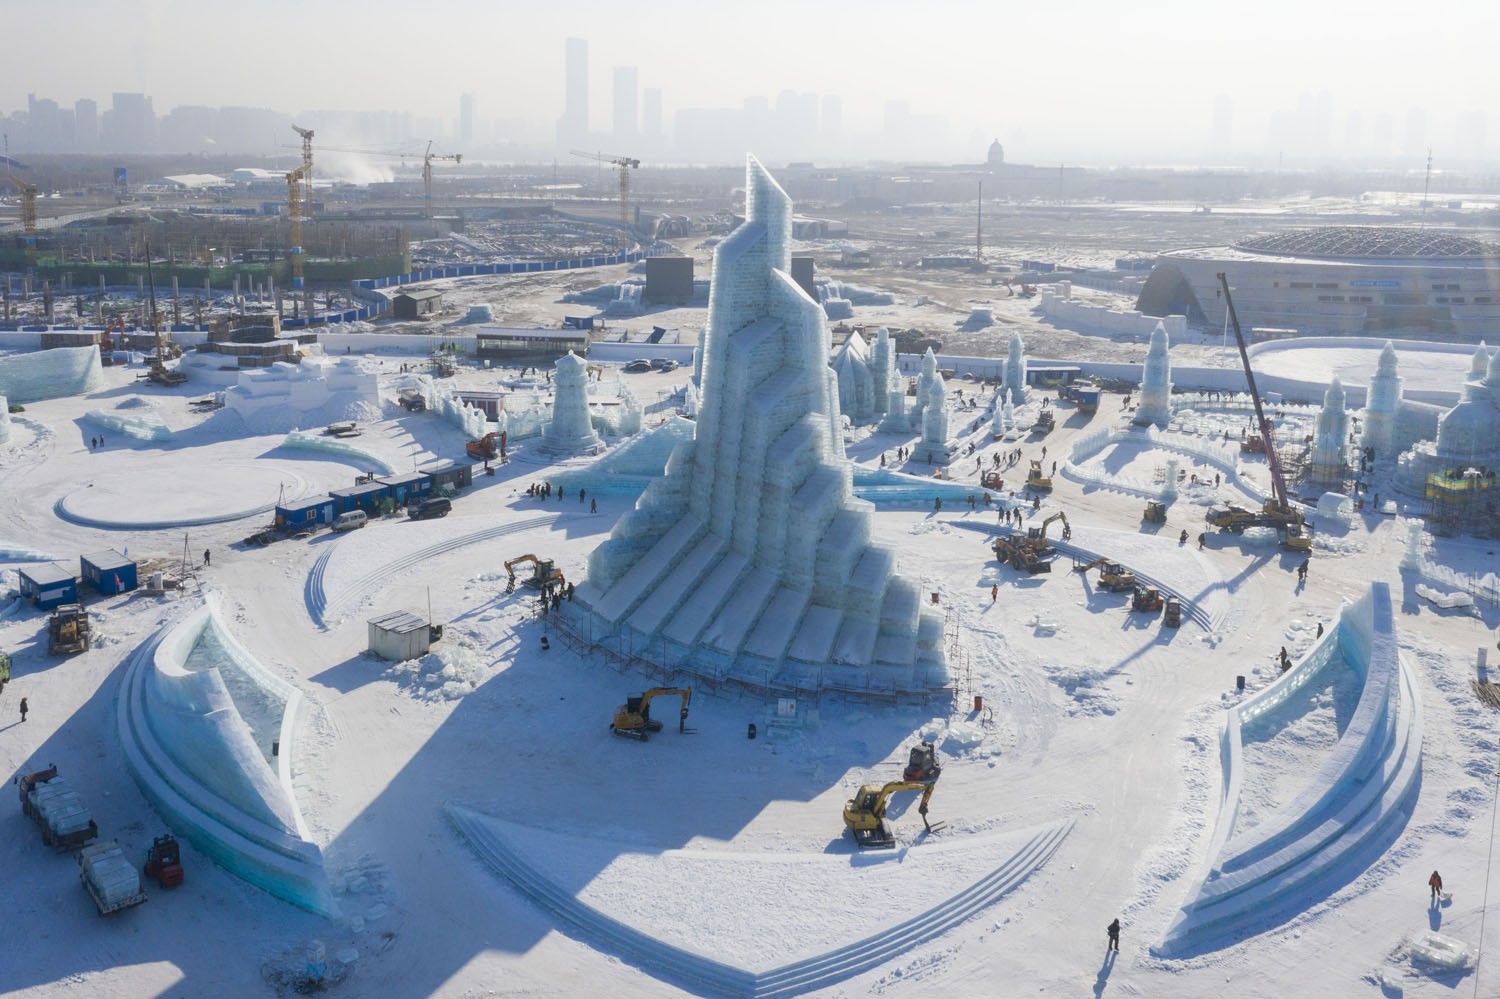 Construction site of Harbin Ice-Snow World in NE China